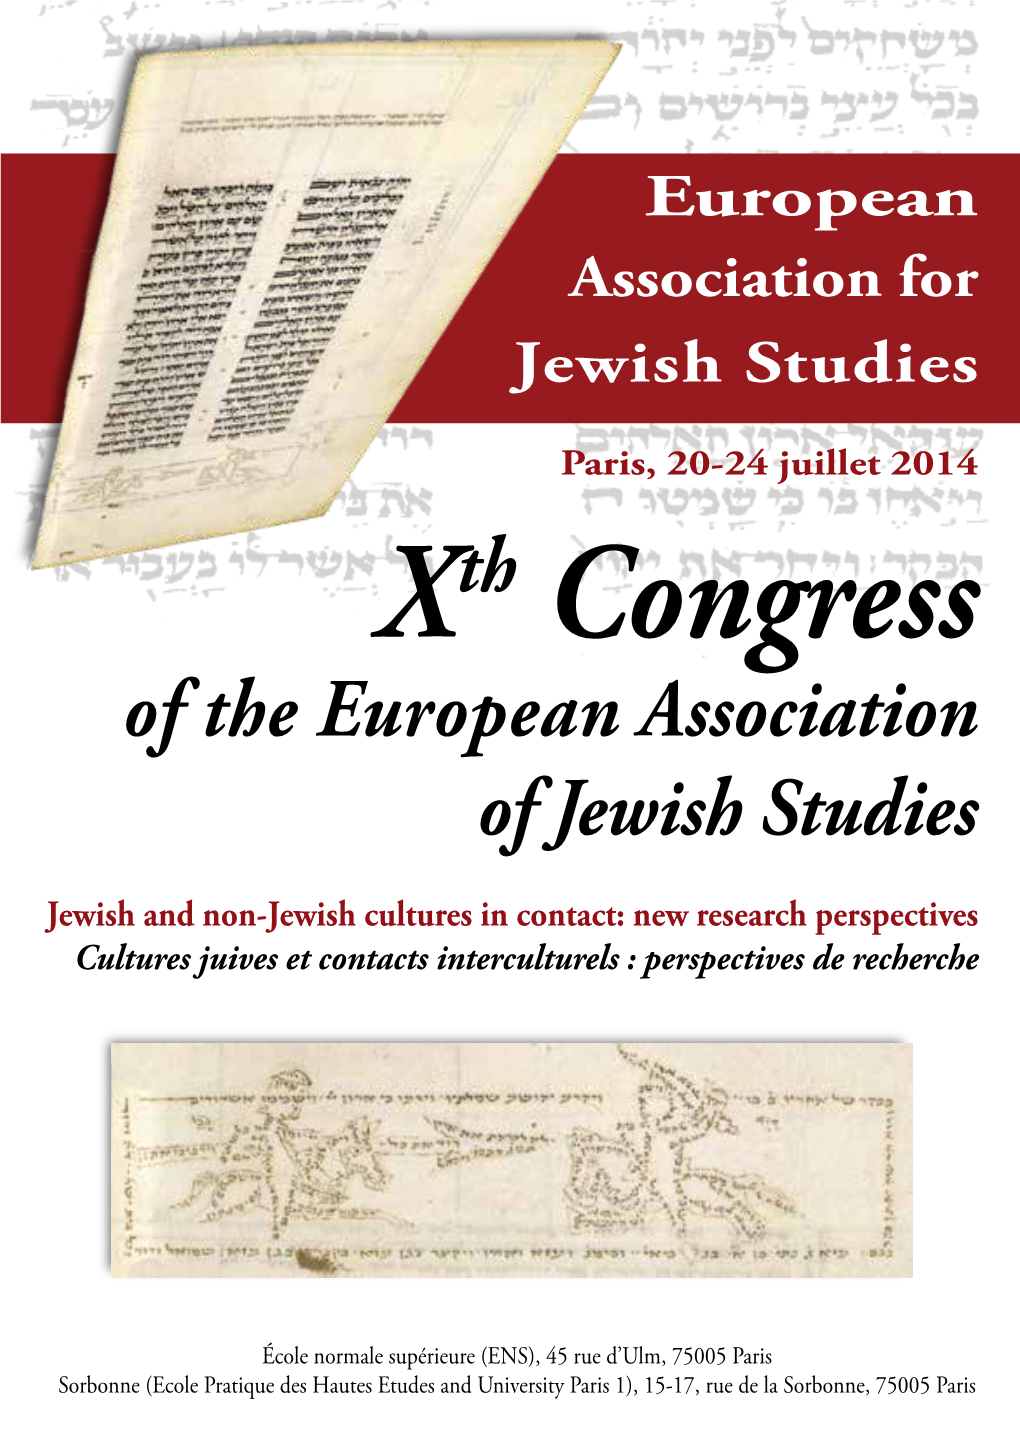 Xth Congress of the European Association for Jewish Studies